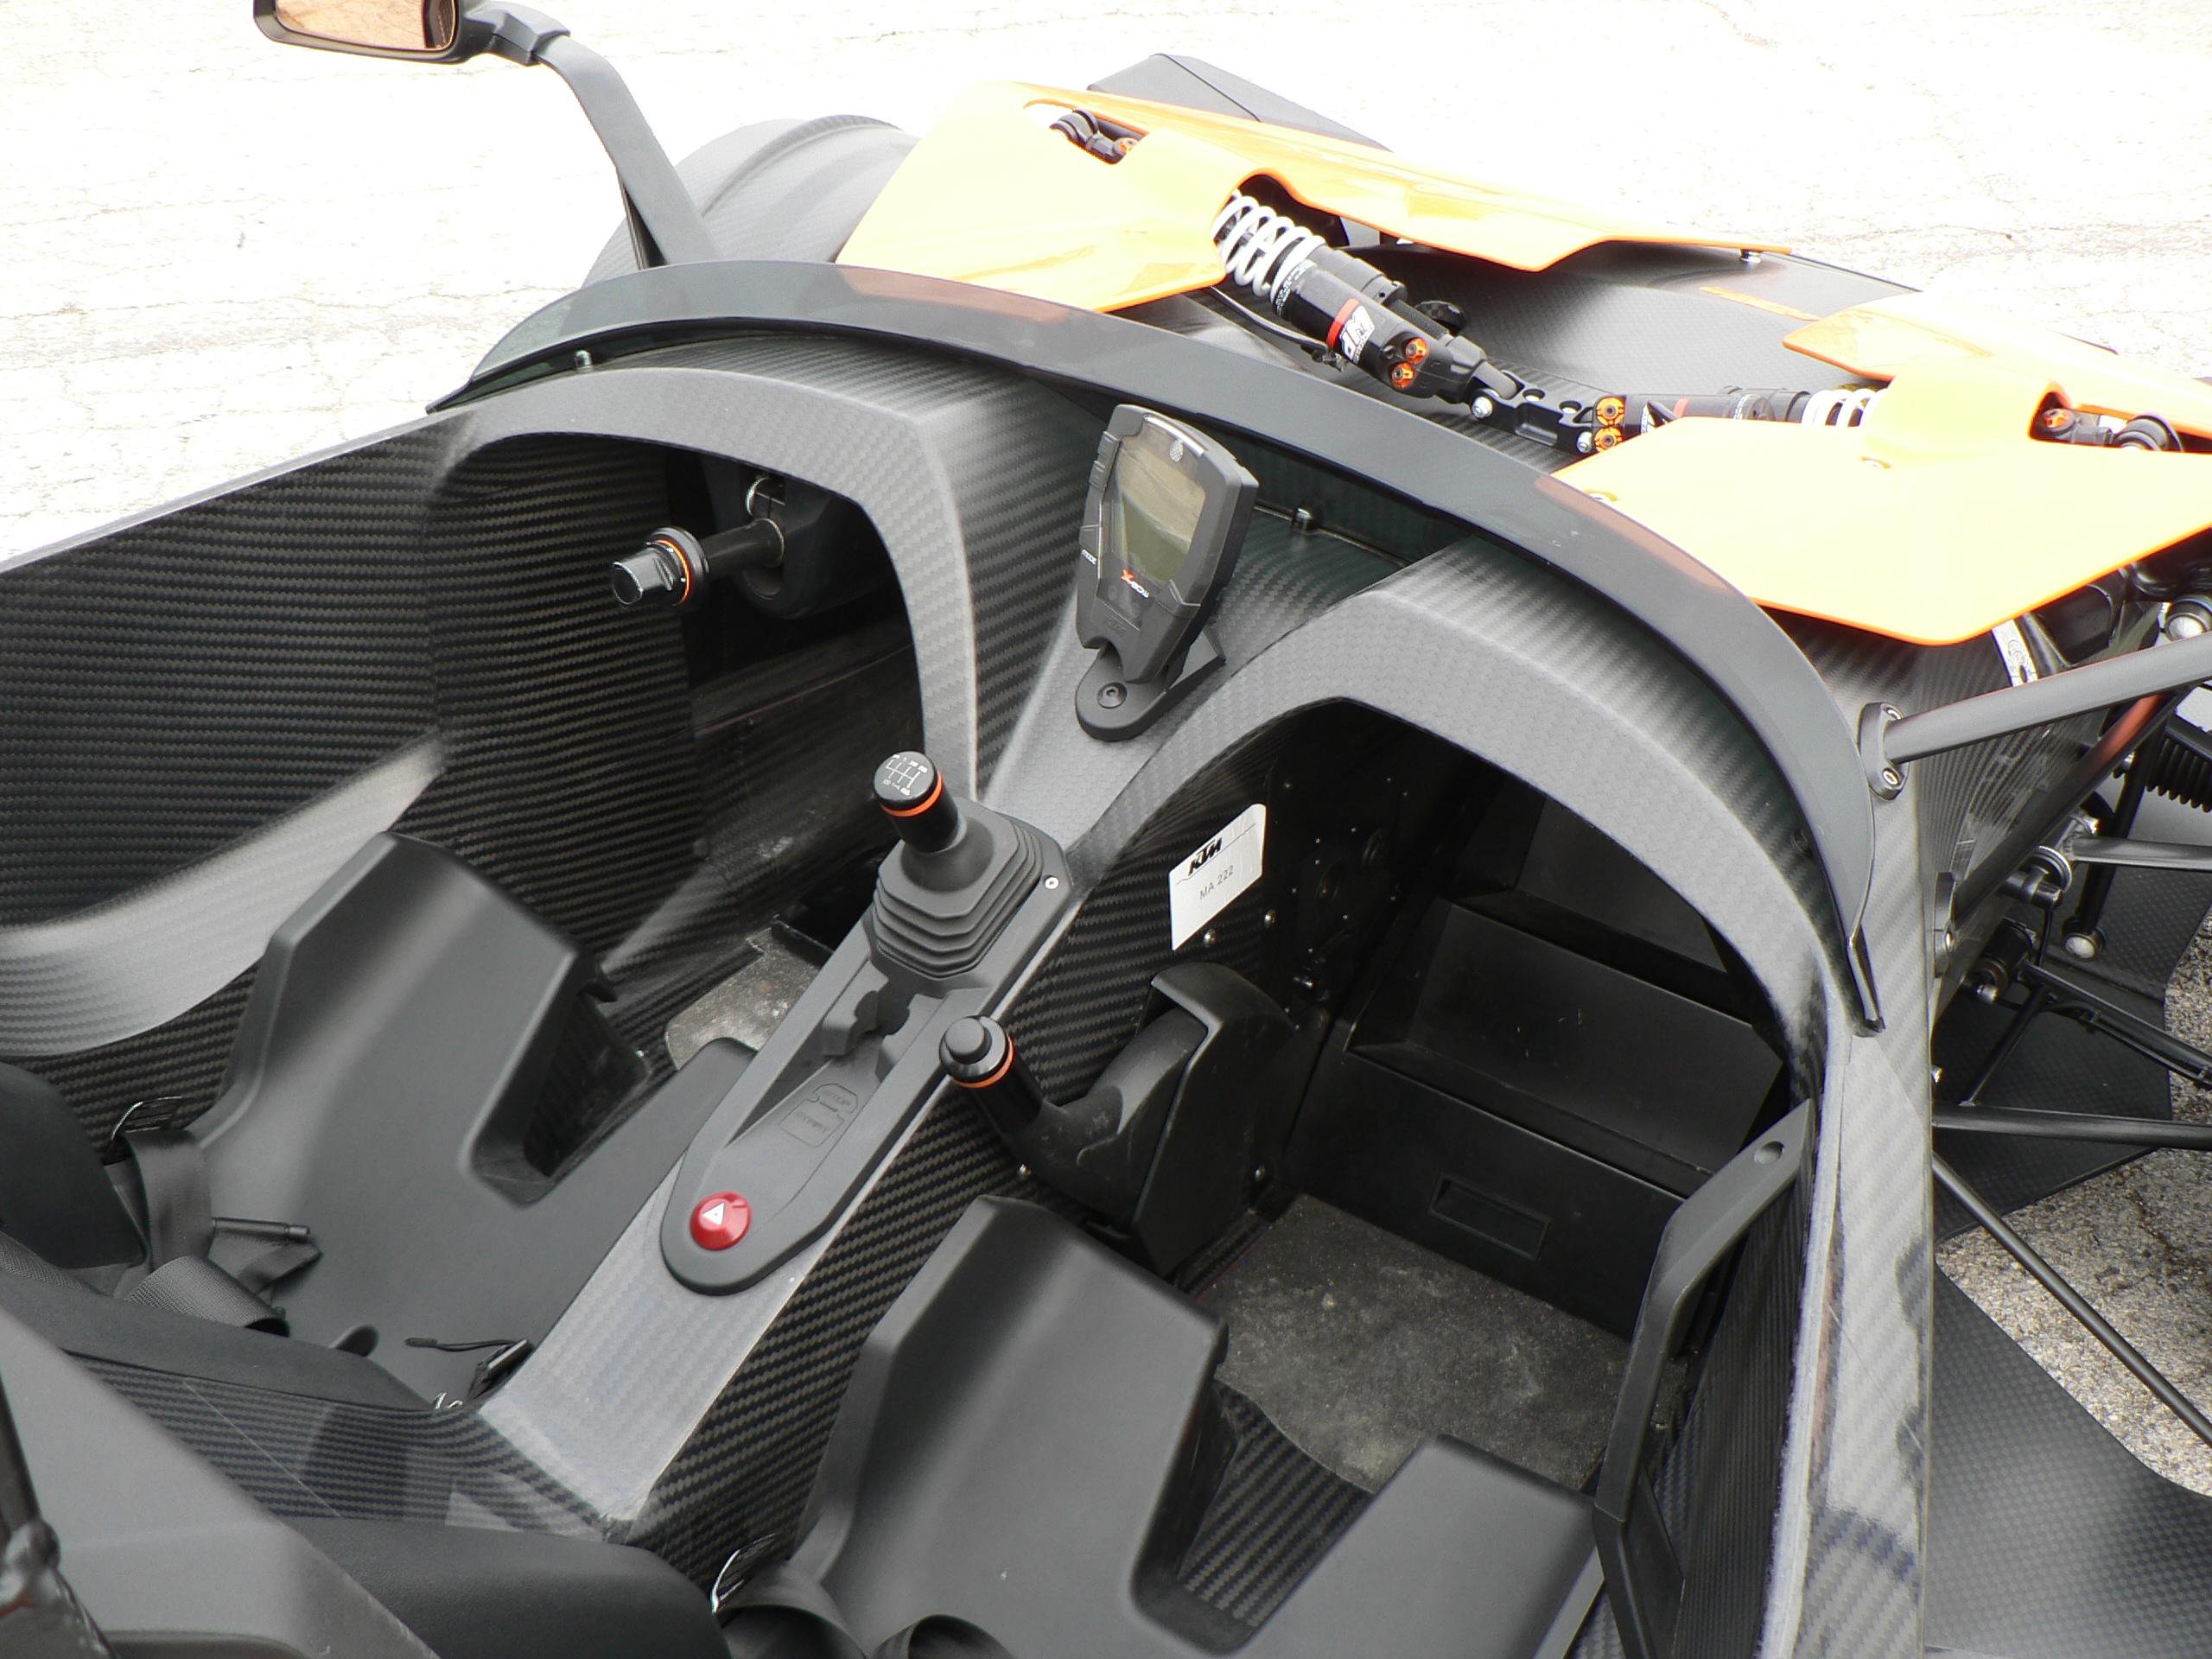 File:KTM X-Bow cockpit.JPG - Wikimedia Commons